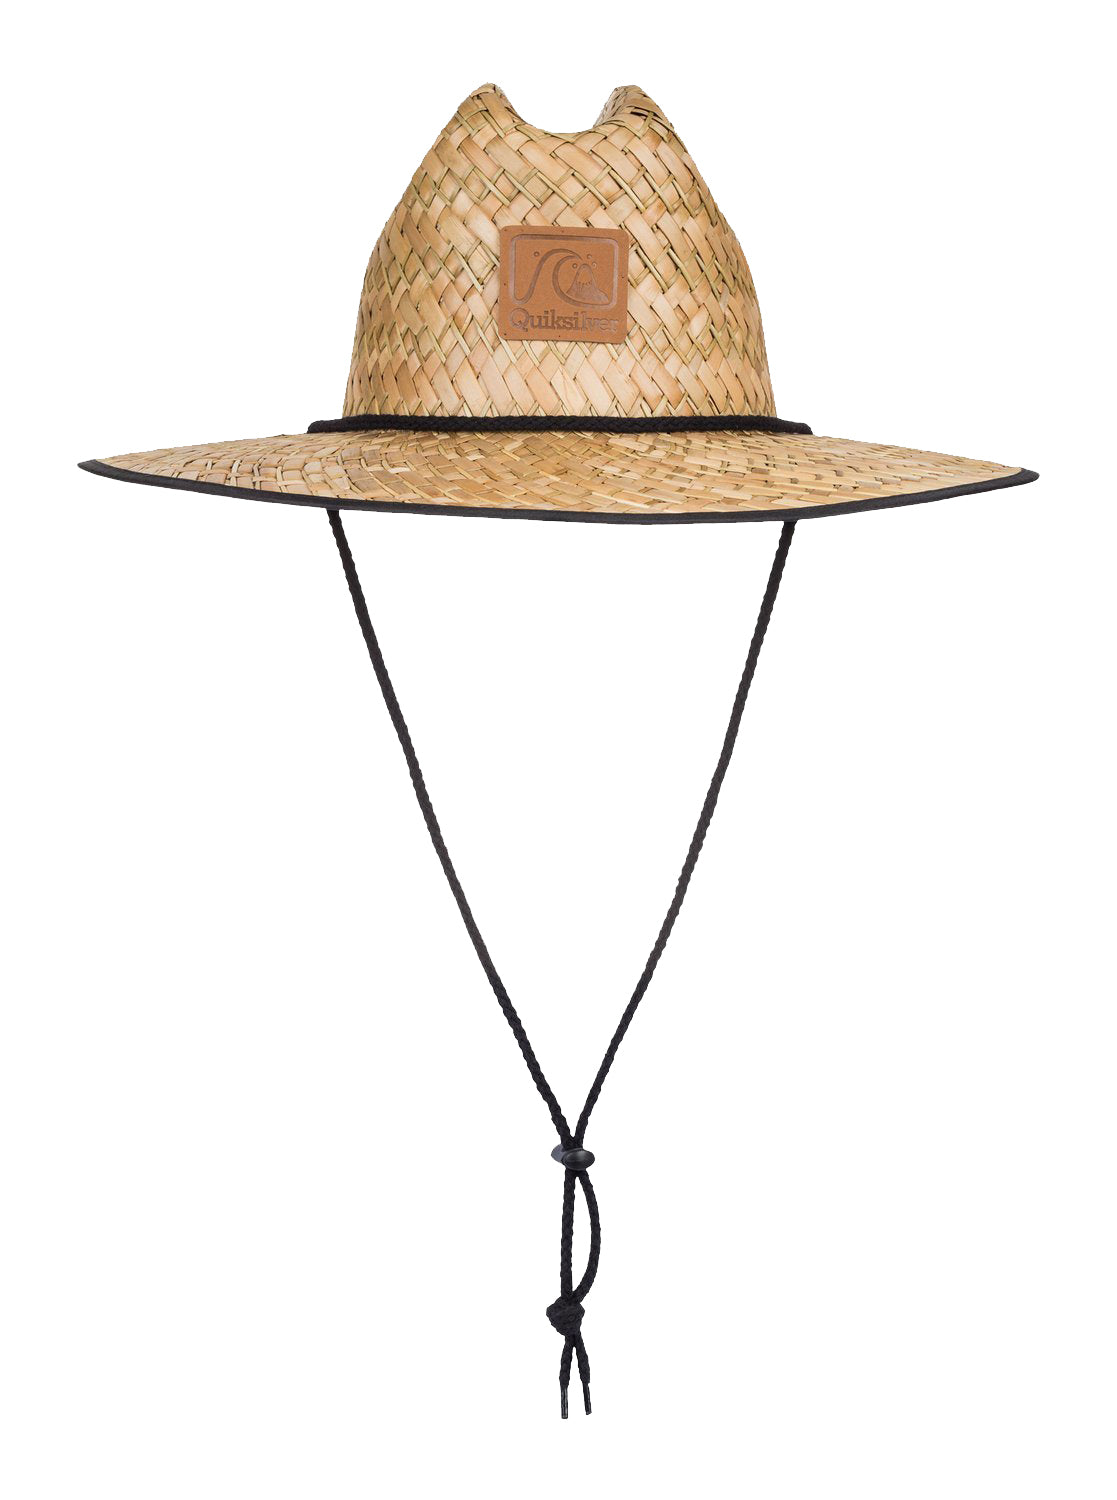 Quiksilver Outsider Straw Lifeguard Hat BGZ0 S/M